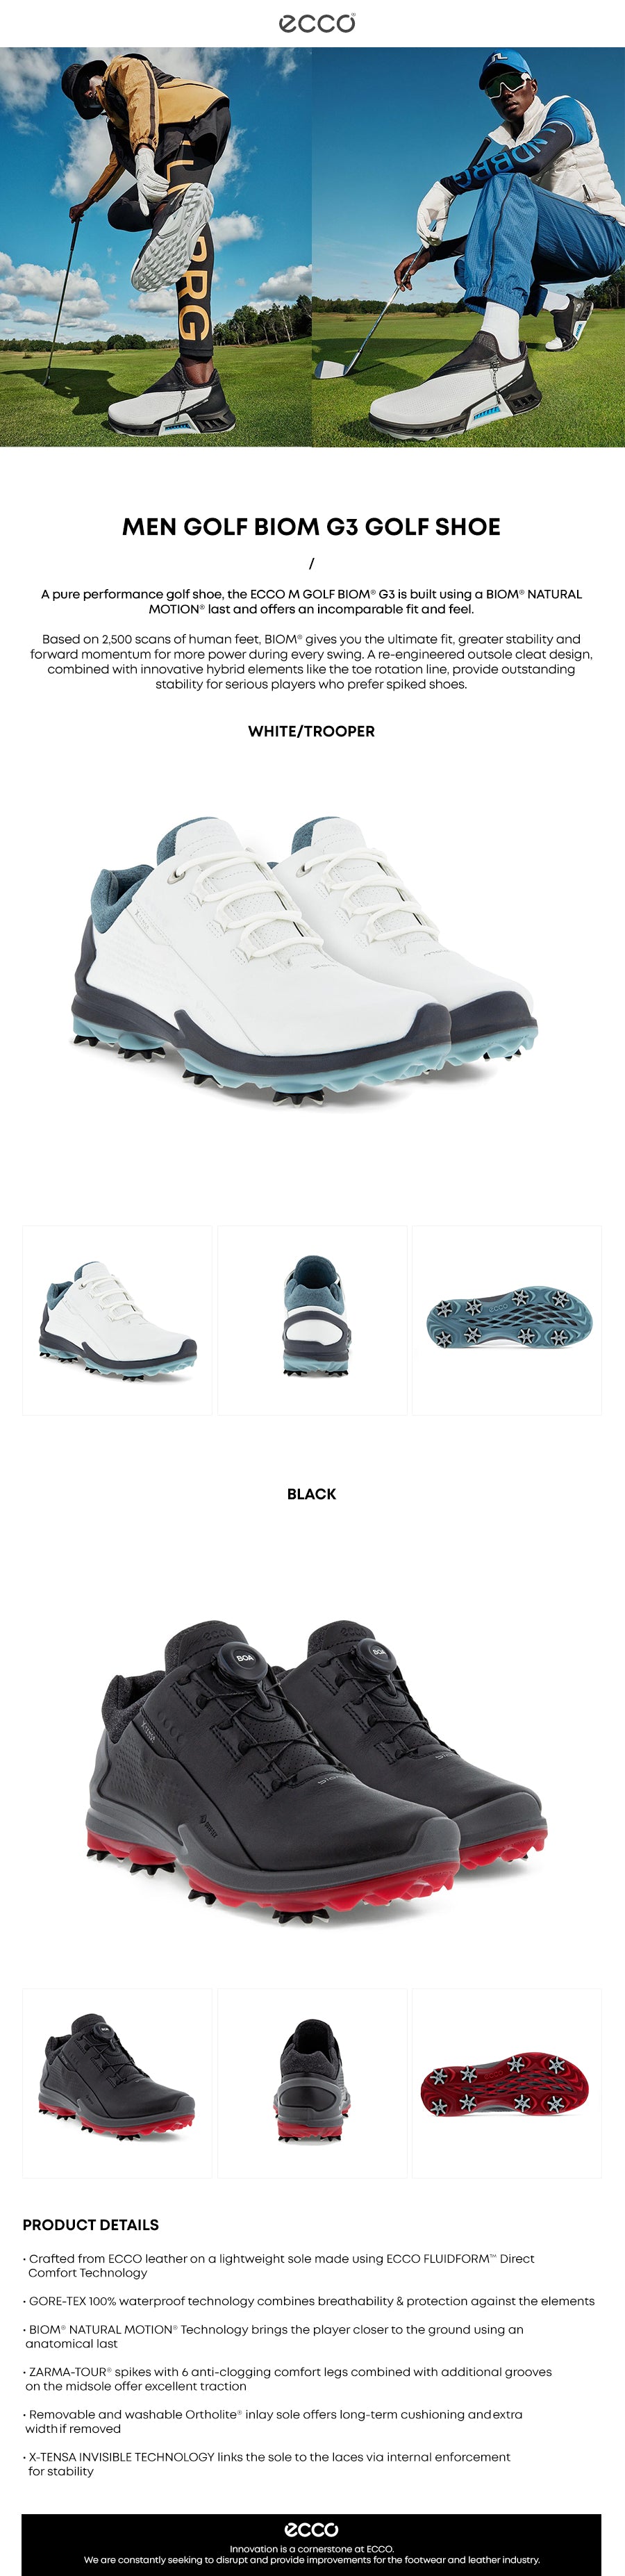 Ecco-Men-Golf-Biom-G3-Golf-Shoe